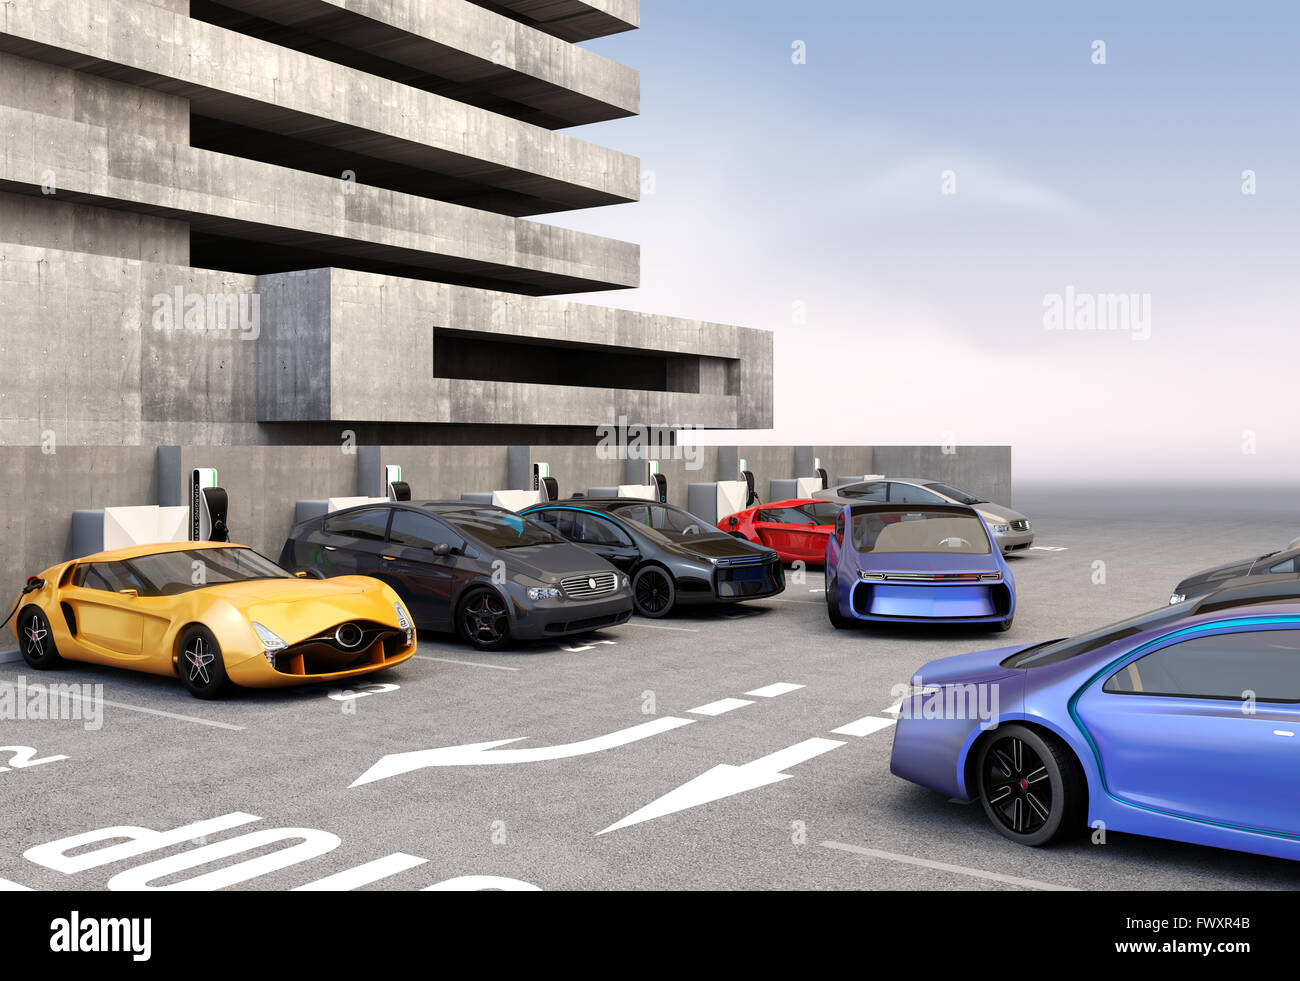 Blue electric car park into parking lot. 3D rendering image. Stock Photo